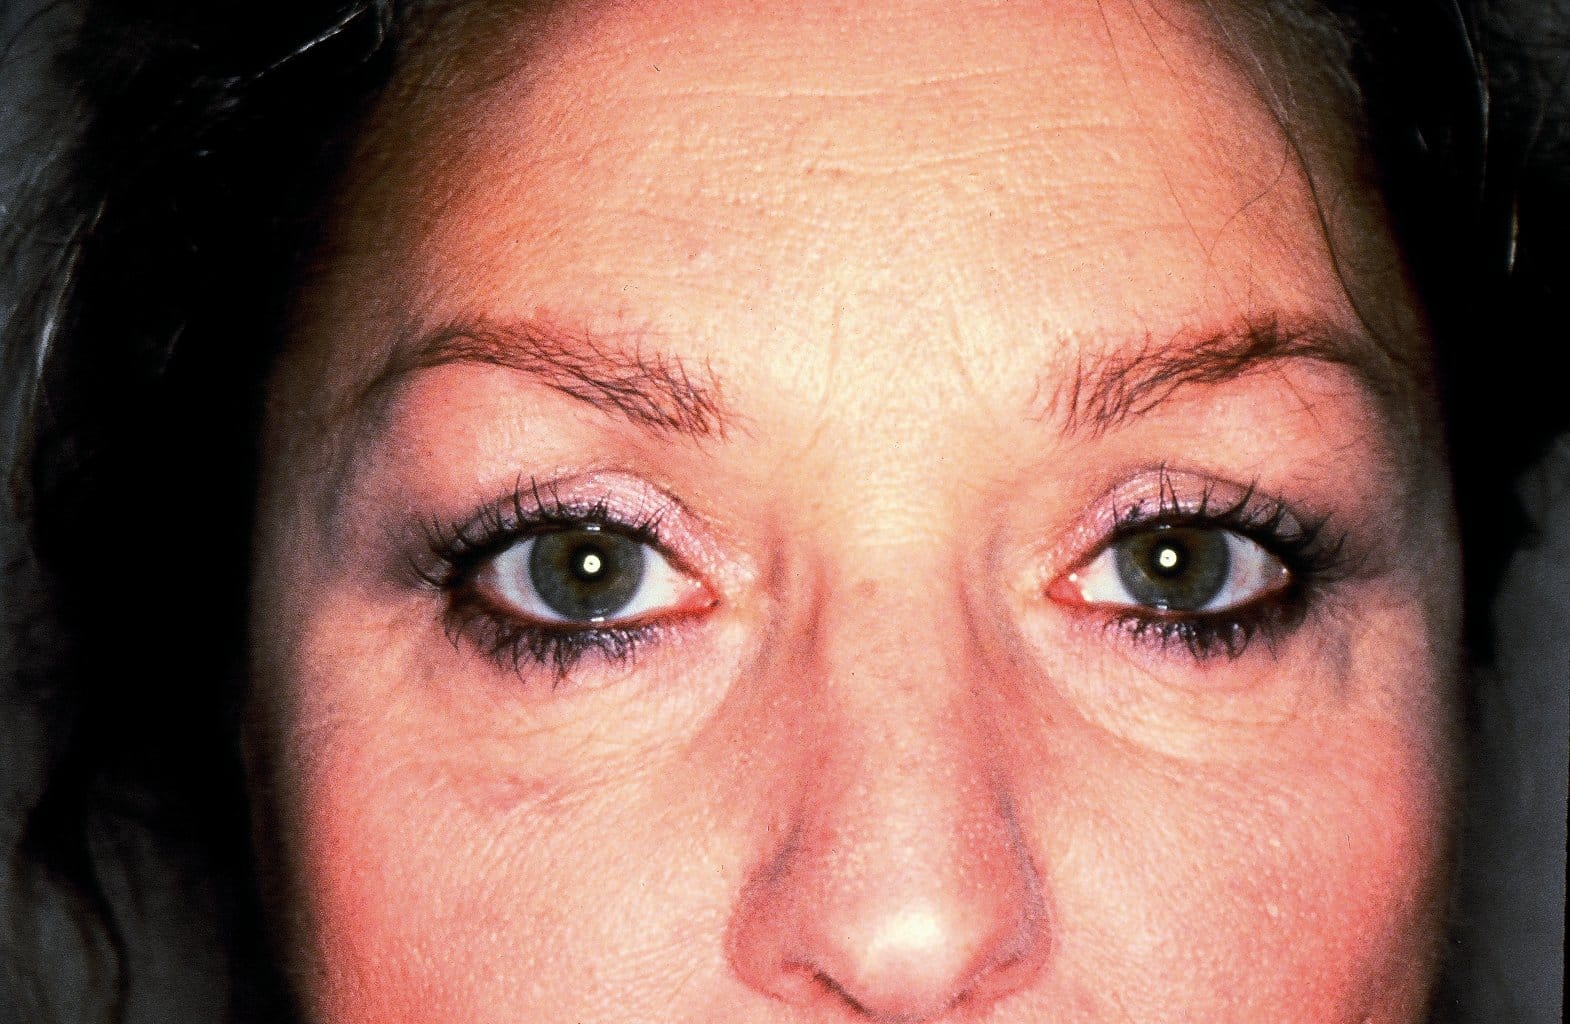 Blepharoplasty eyelid surgery after